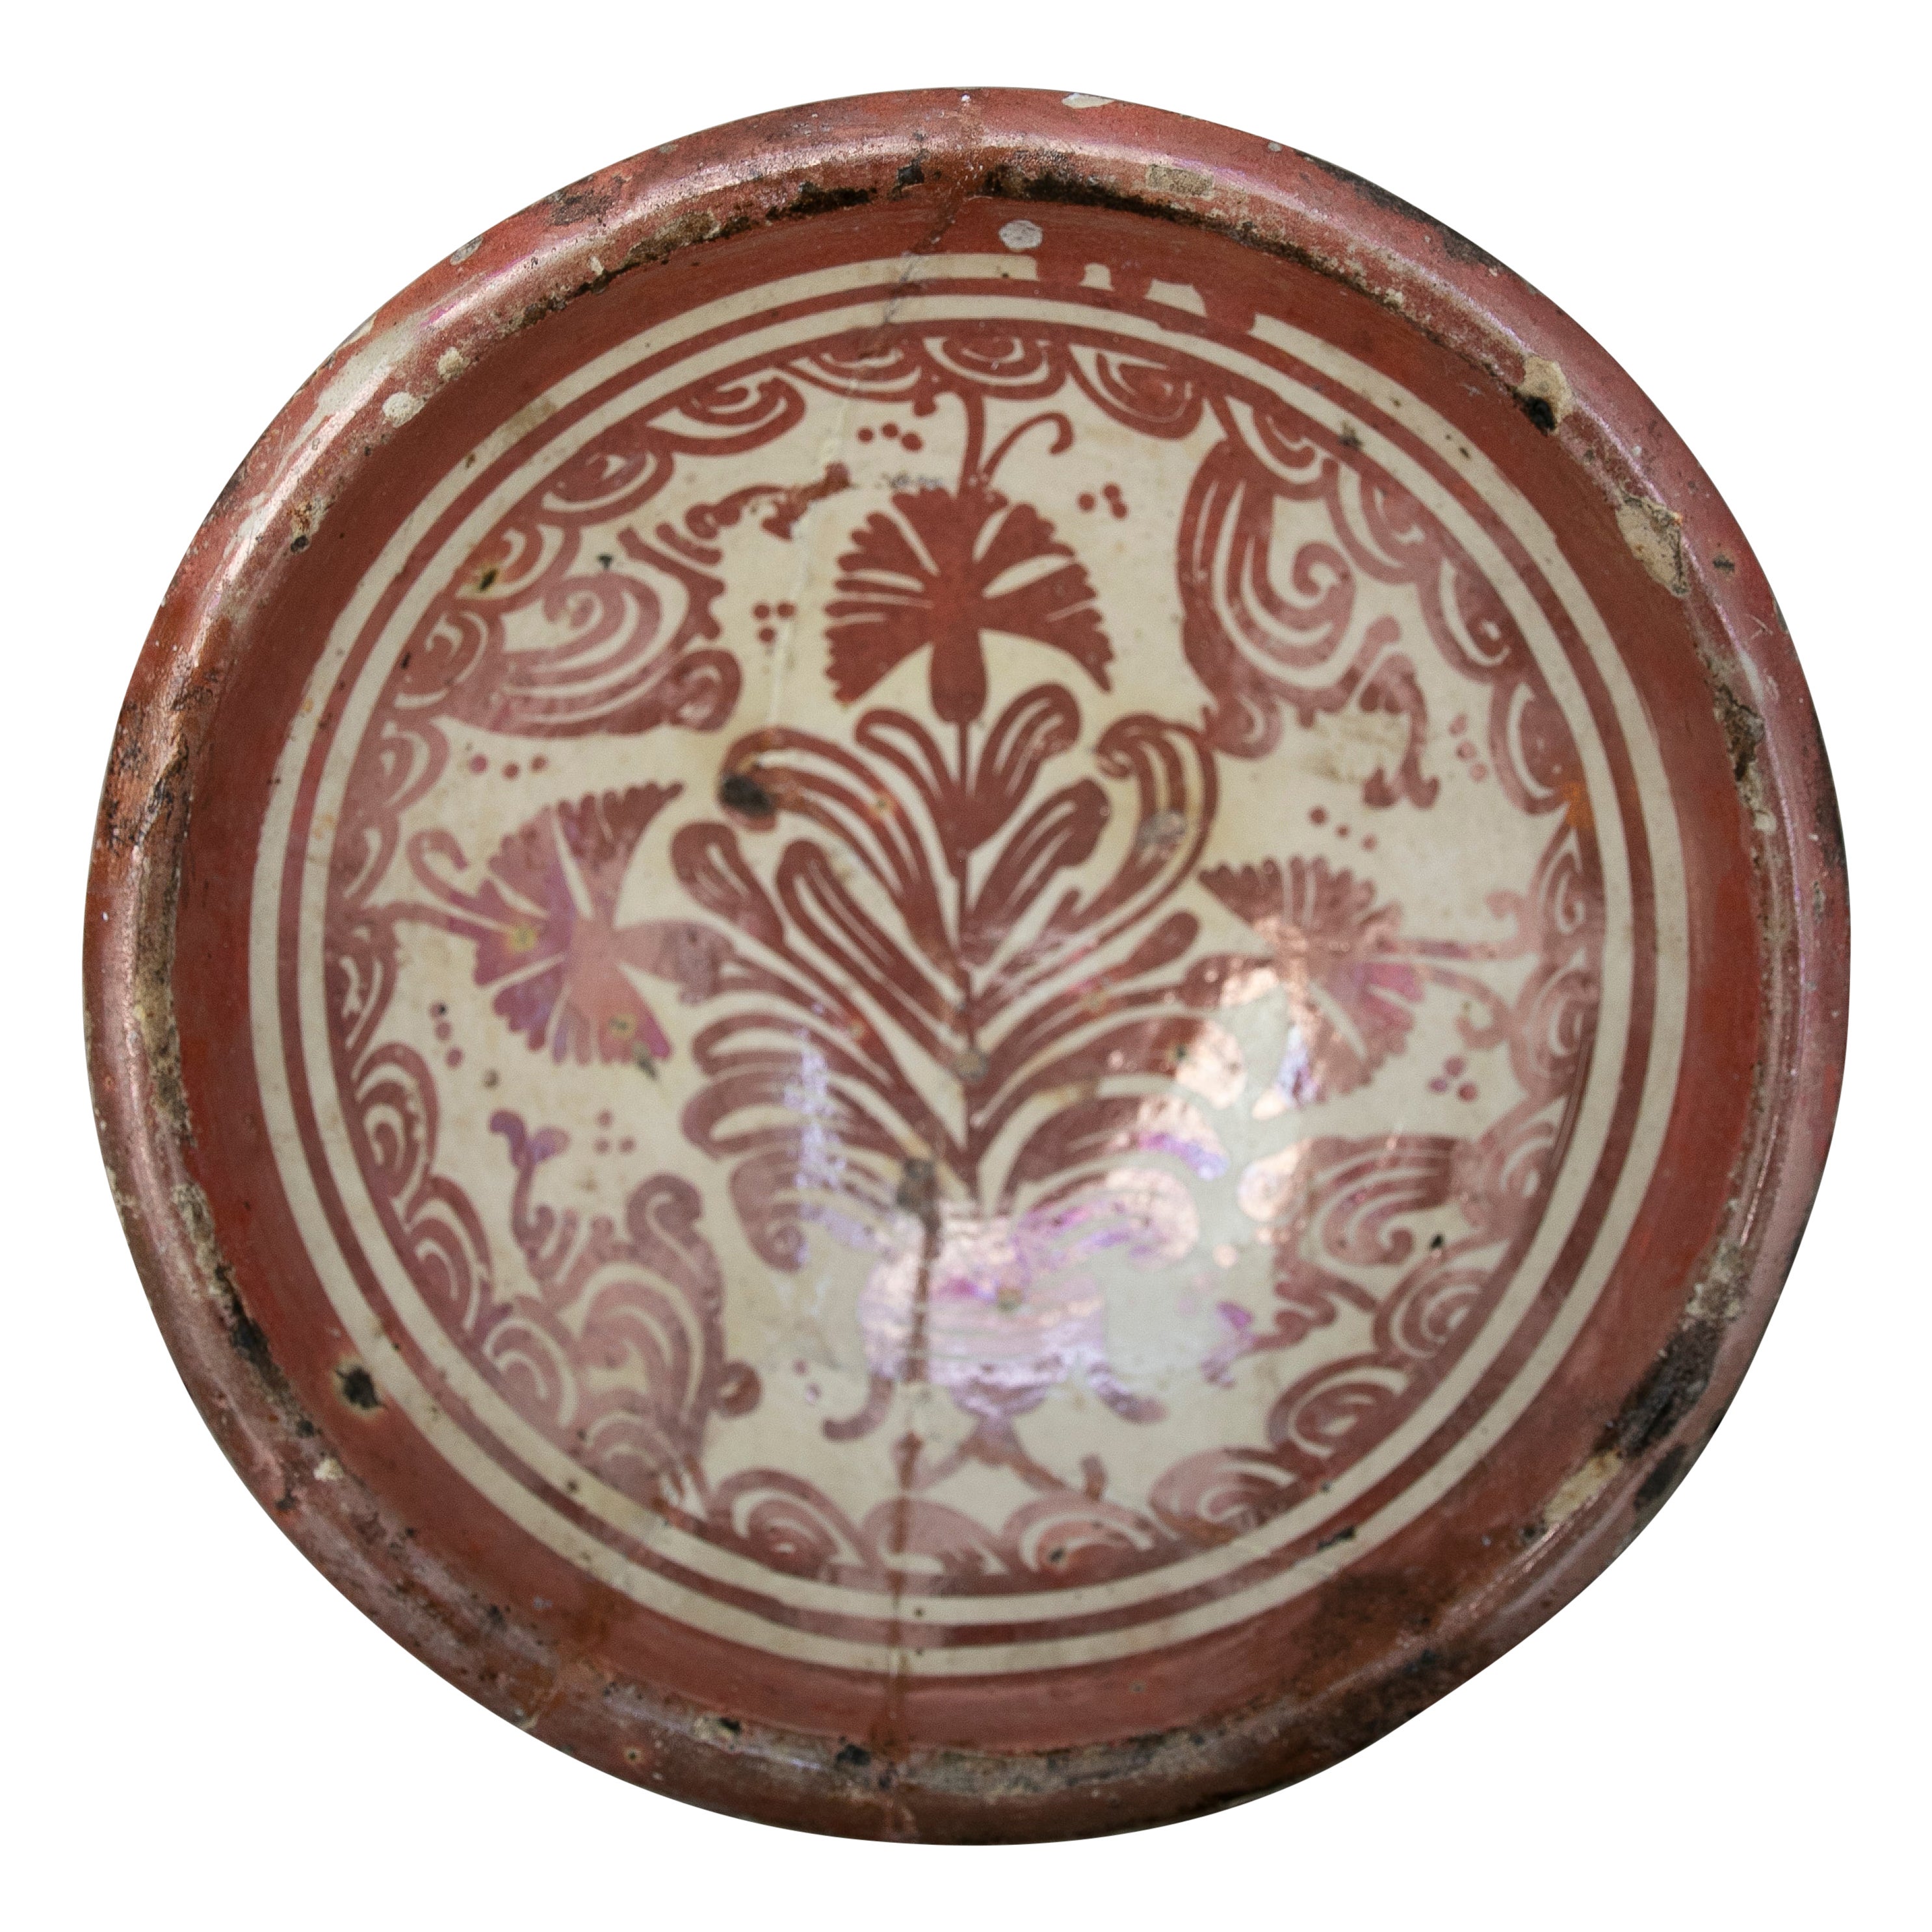 Spanischer Valencianischer Kaminsims-Keramikteller aus dem 17. Jahrhundert